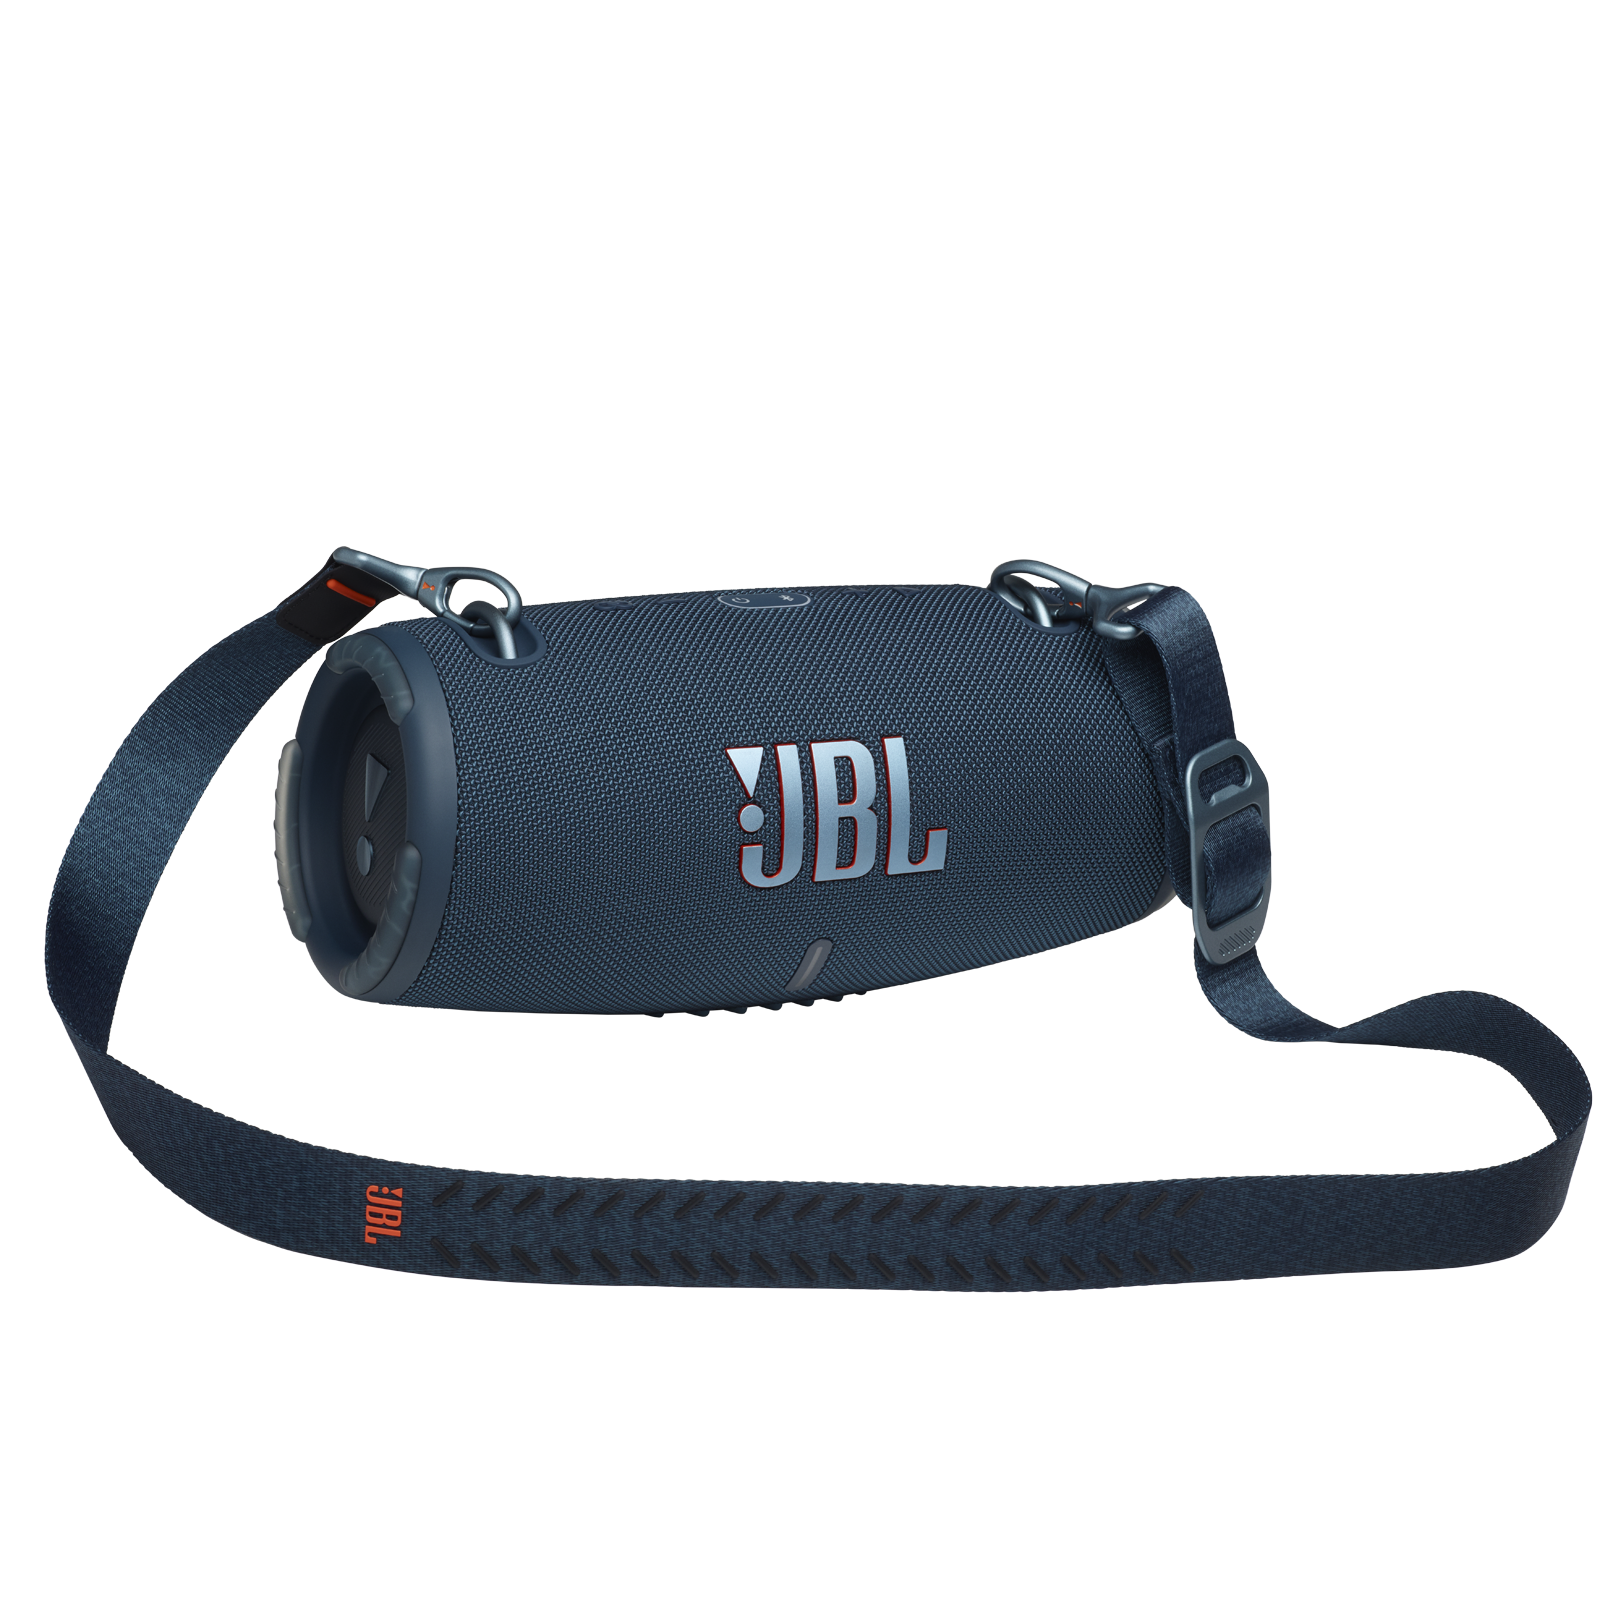 JBL Xtreme 3 - Blue - Portable waterproof speaker - Detailshot 1